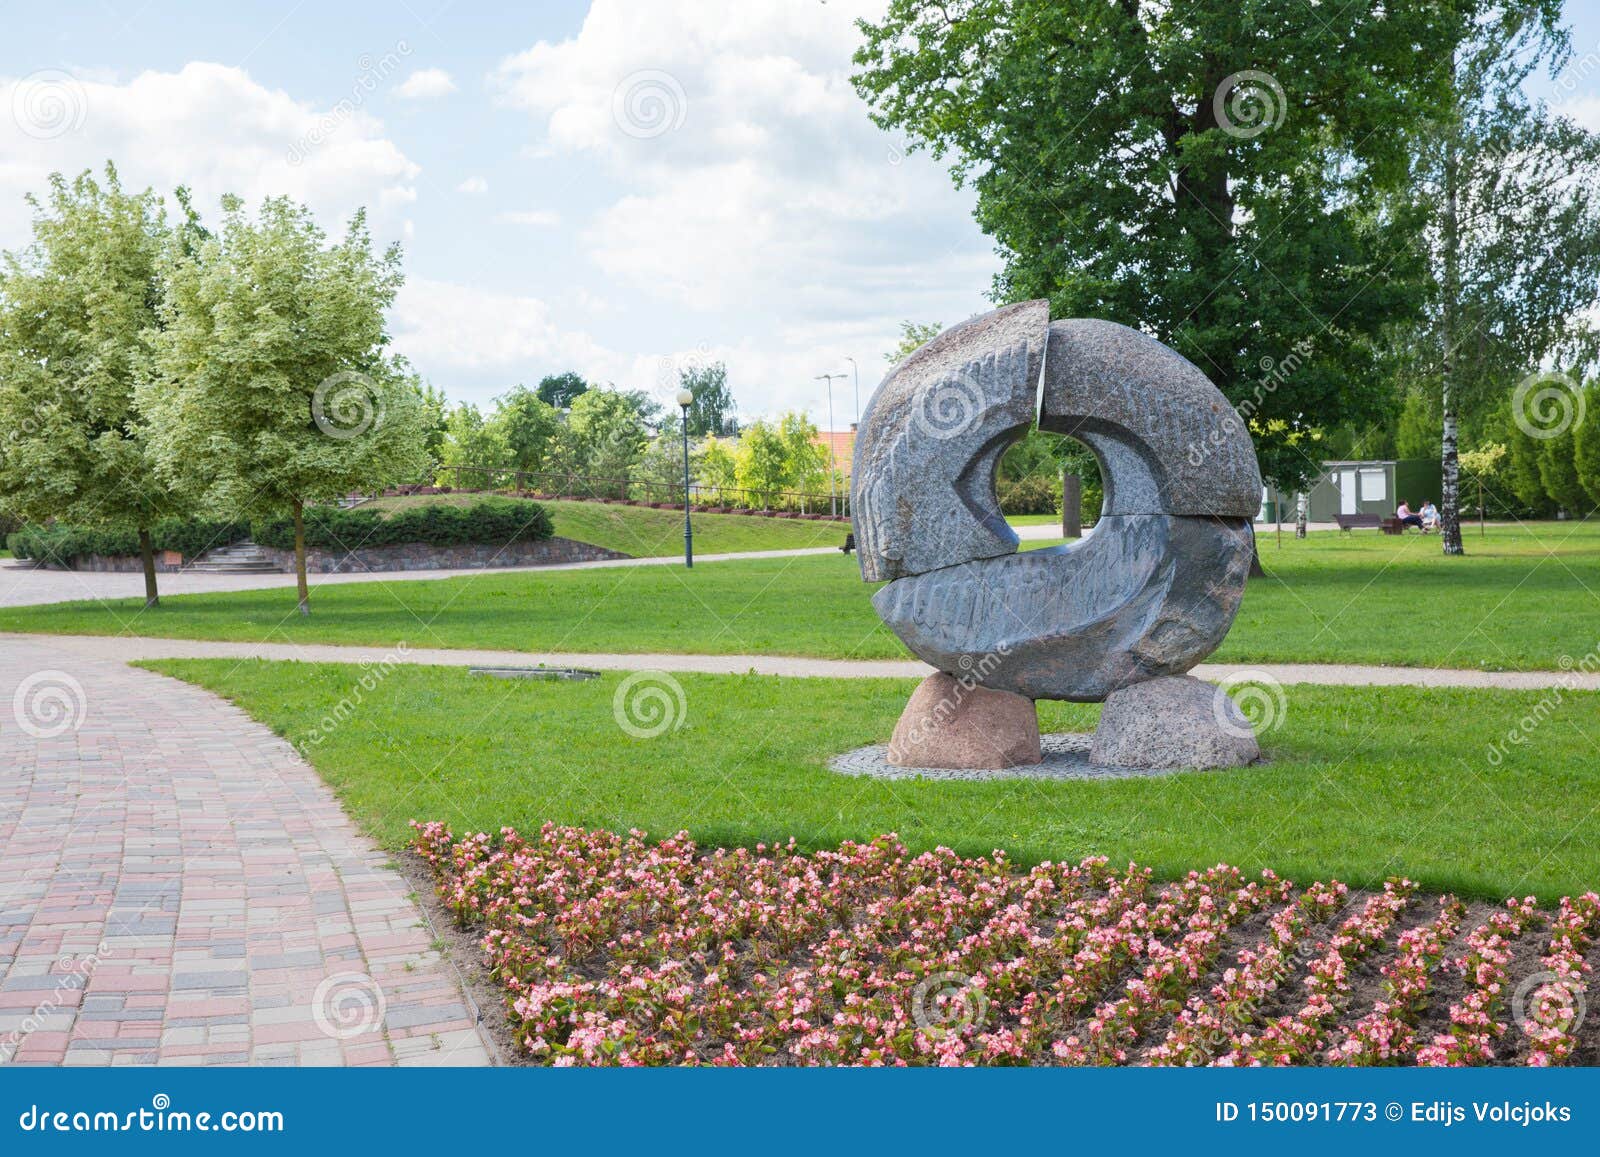 City Jelgava Latvian Republic City Park With Sculpture And